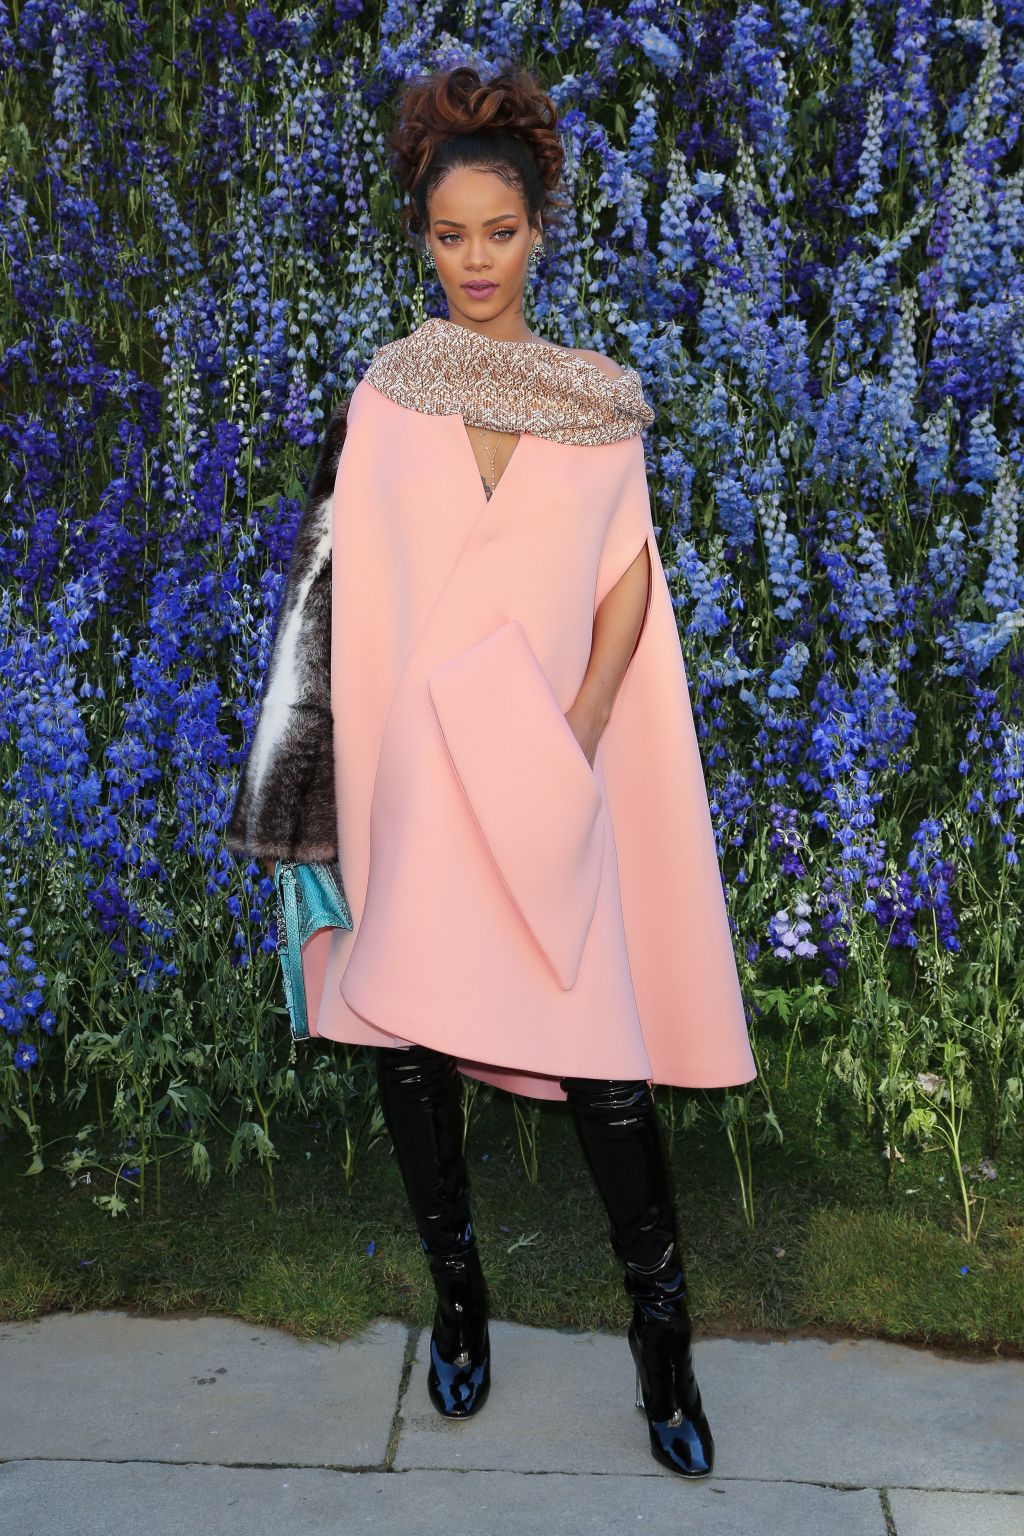 Rihanna attends Dior fashion show in Paris